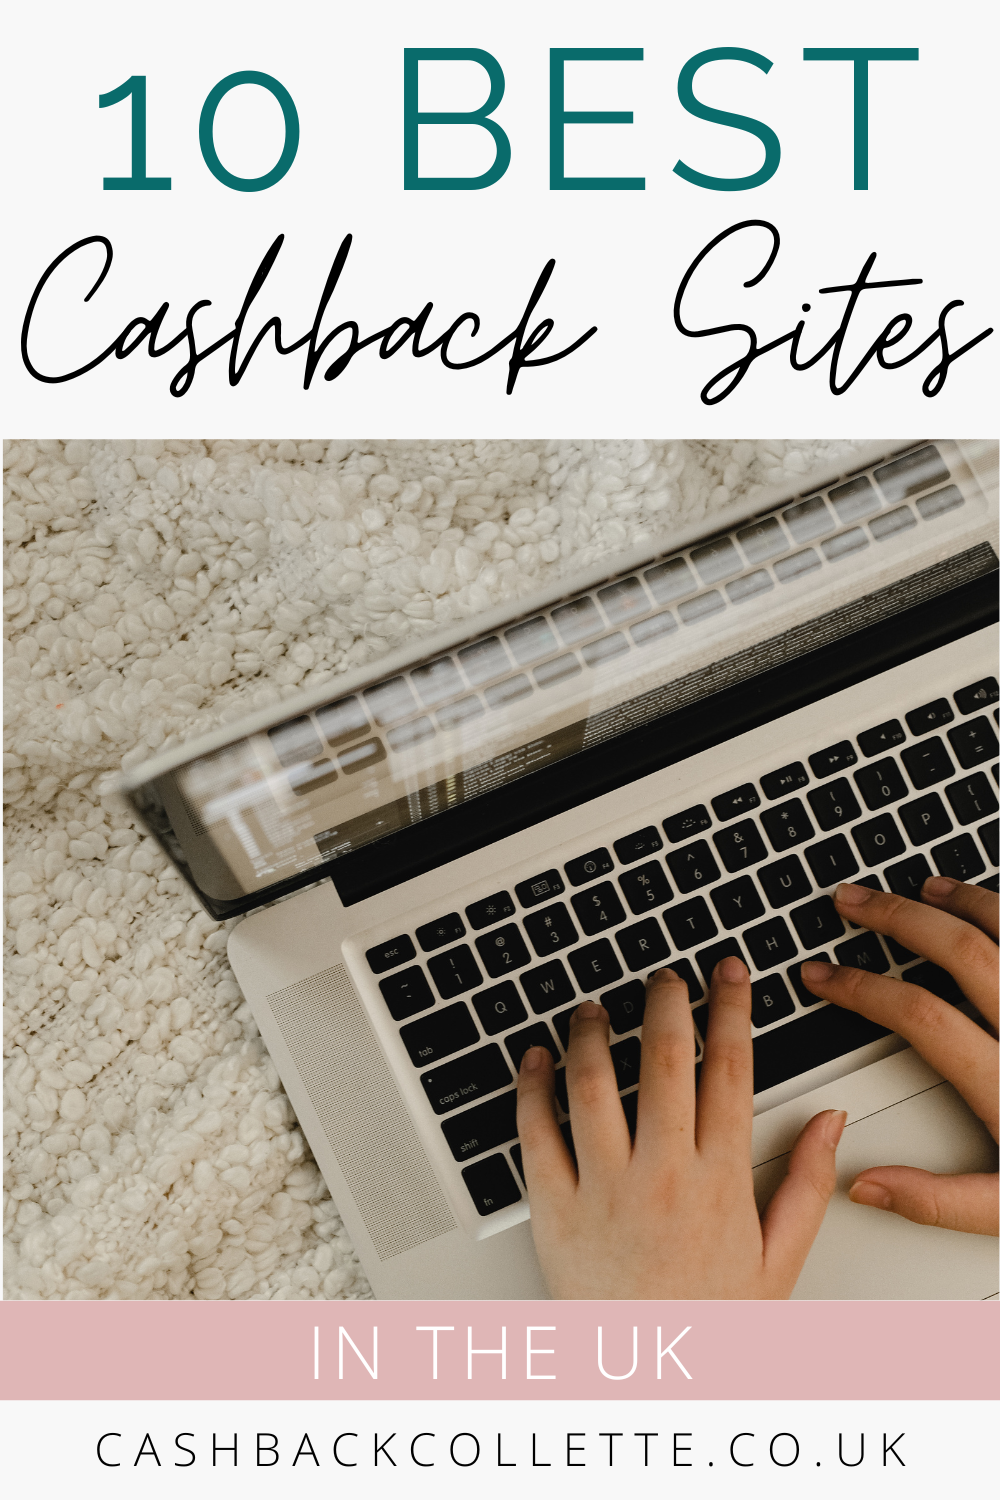 Best cashback sites pin